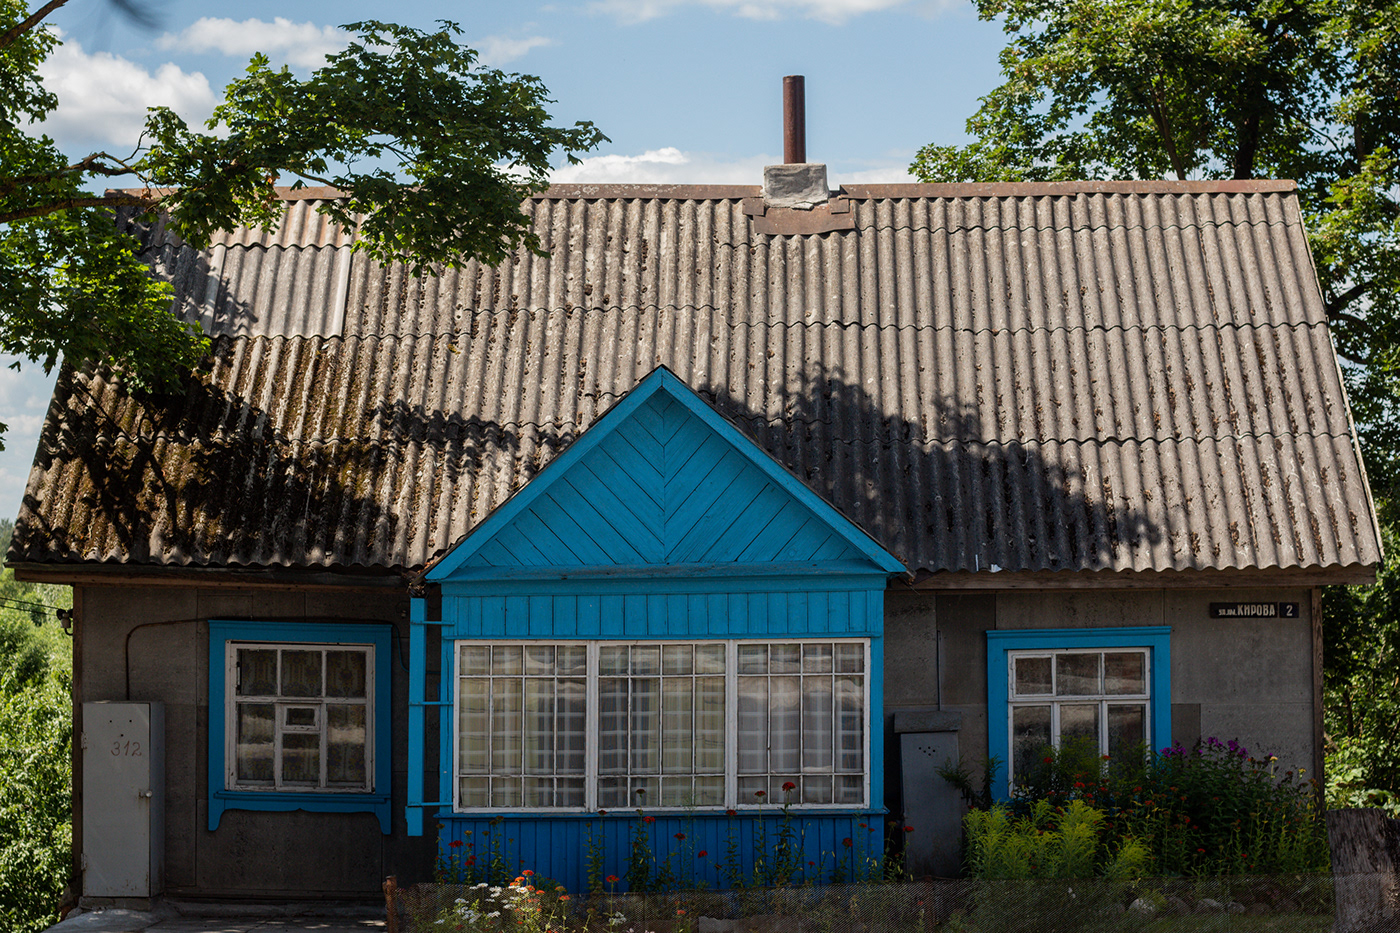 architecture belarus Nature Photography  village